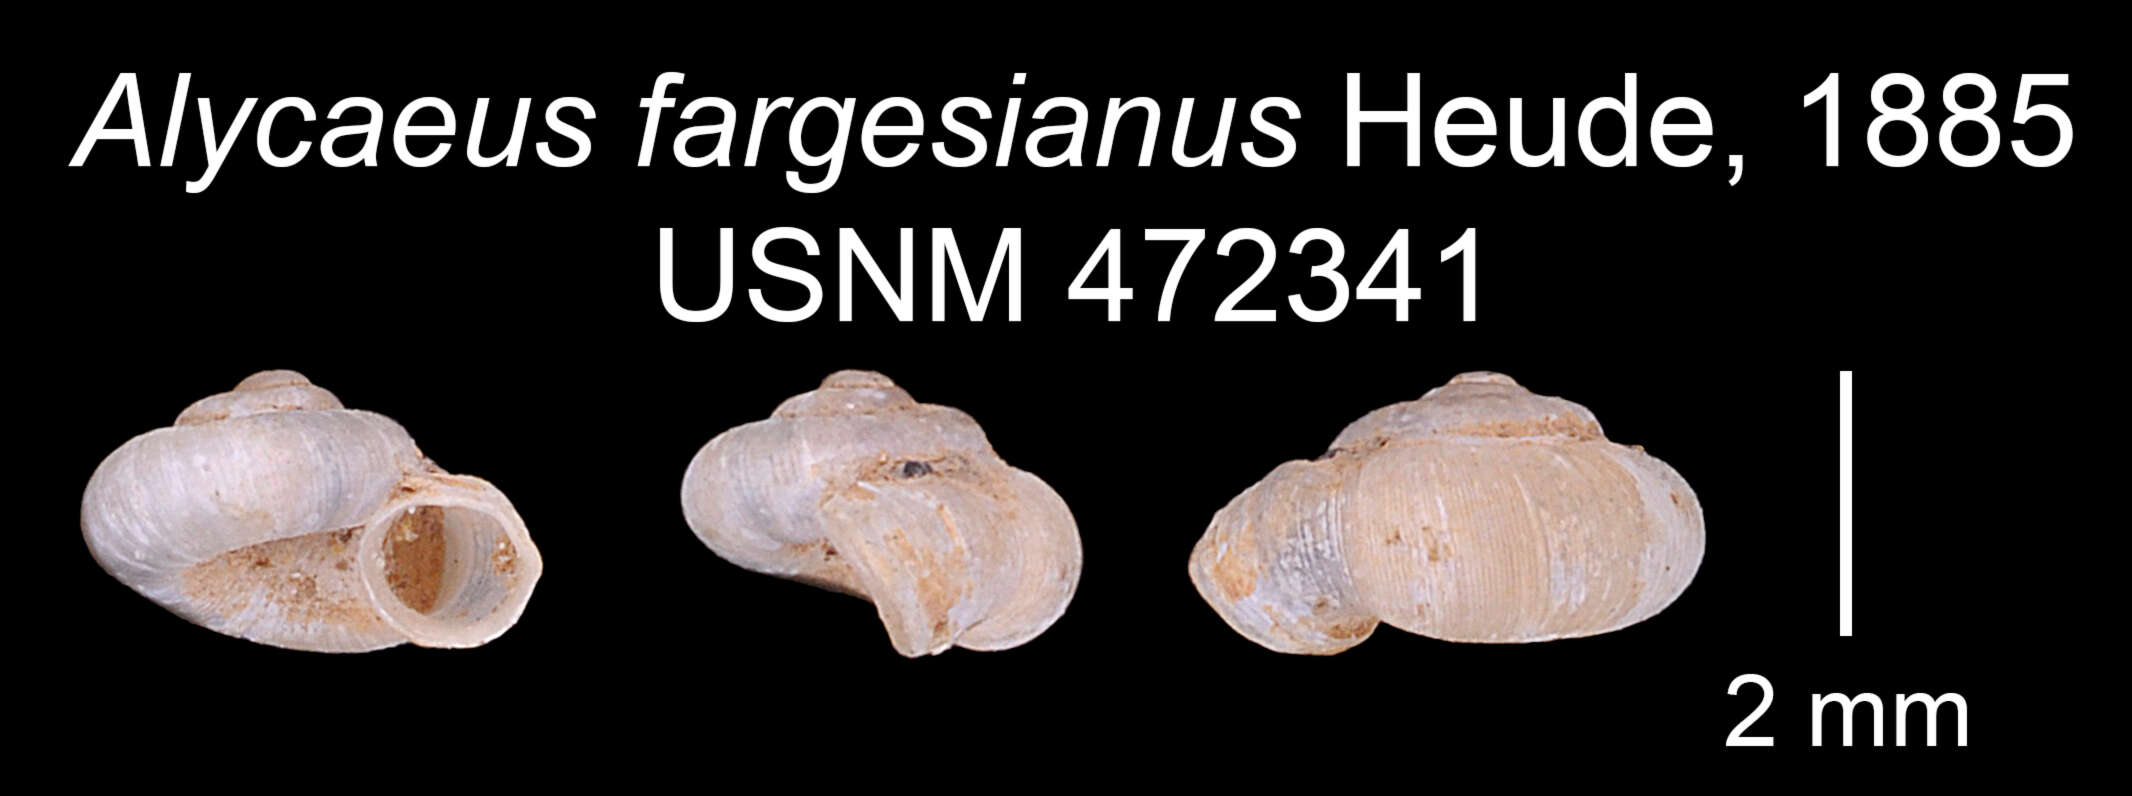 Image of Alycaeus fargesianus Heude 1885